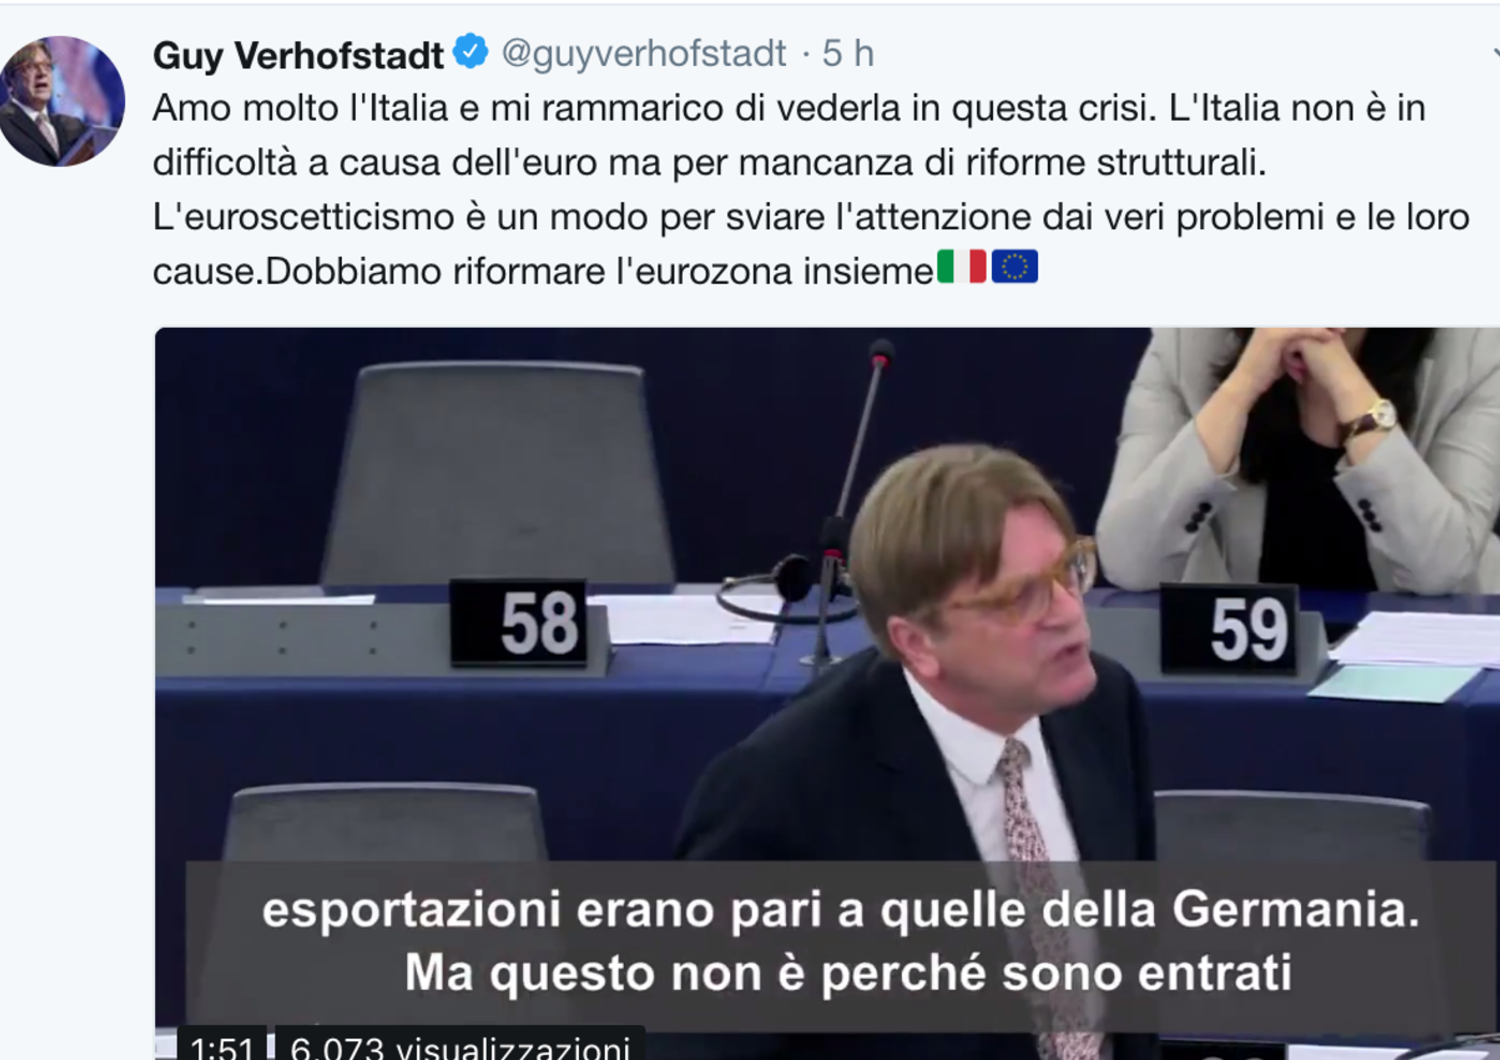 Il tweet in italiano dell&#39;eurodeputato belga&nbsp;Verhofstadt: &quot;Amo l&#39;Italia, riformiamo&nbsp;l&#39;eurozona&quot;